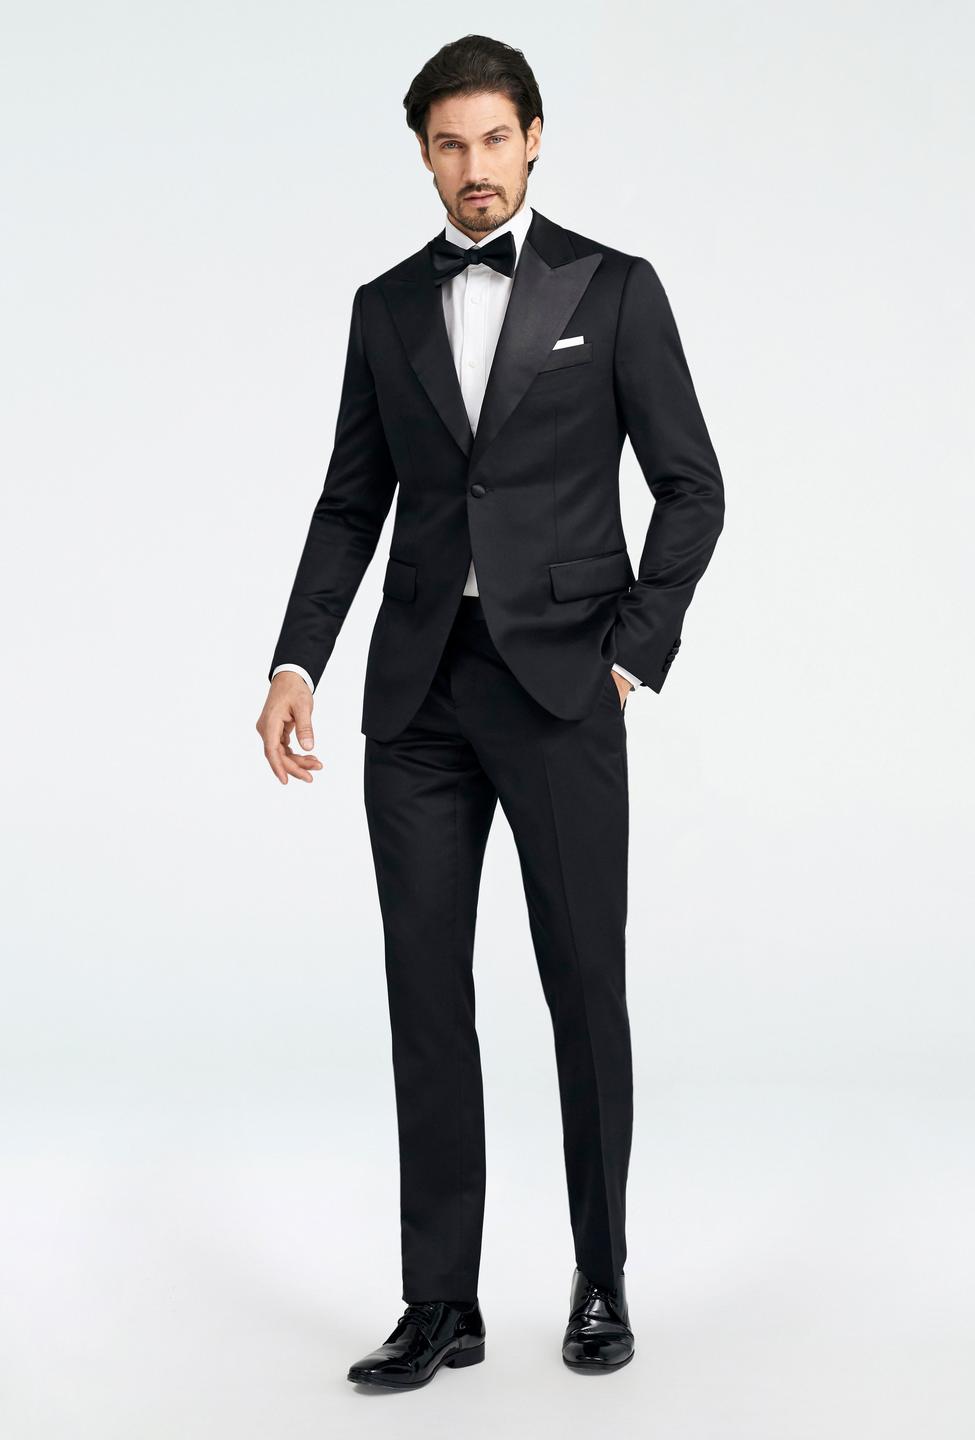 Black suit - Hampton Solid Design from Premium Indochino Collection